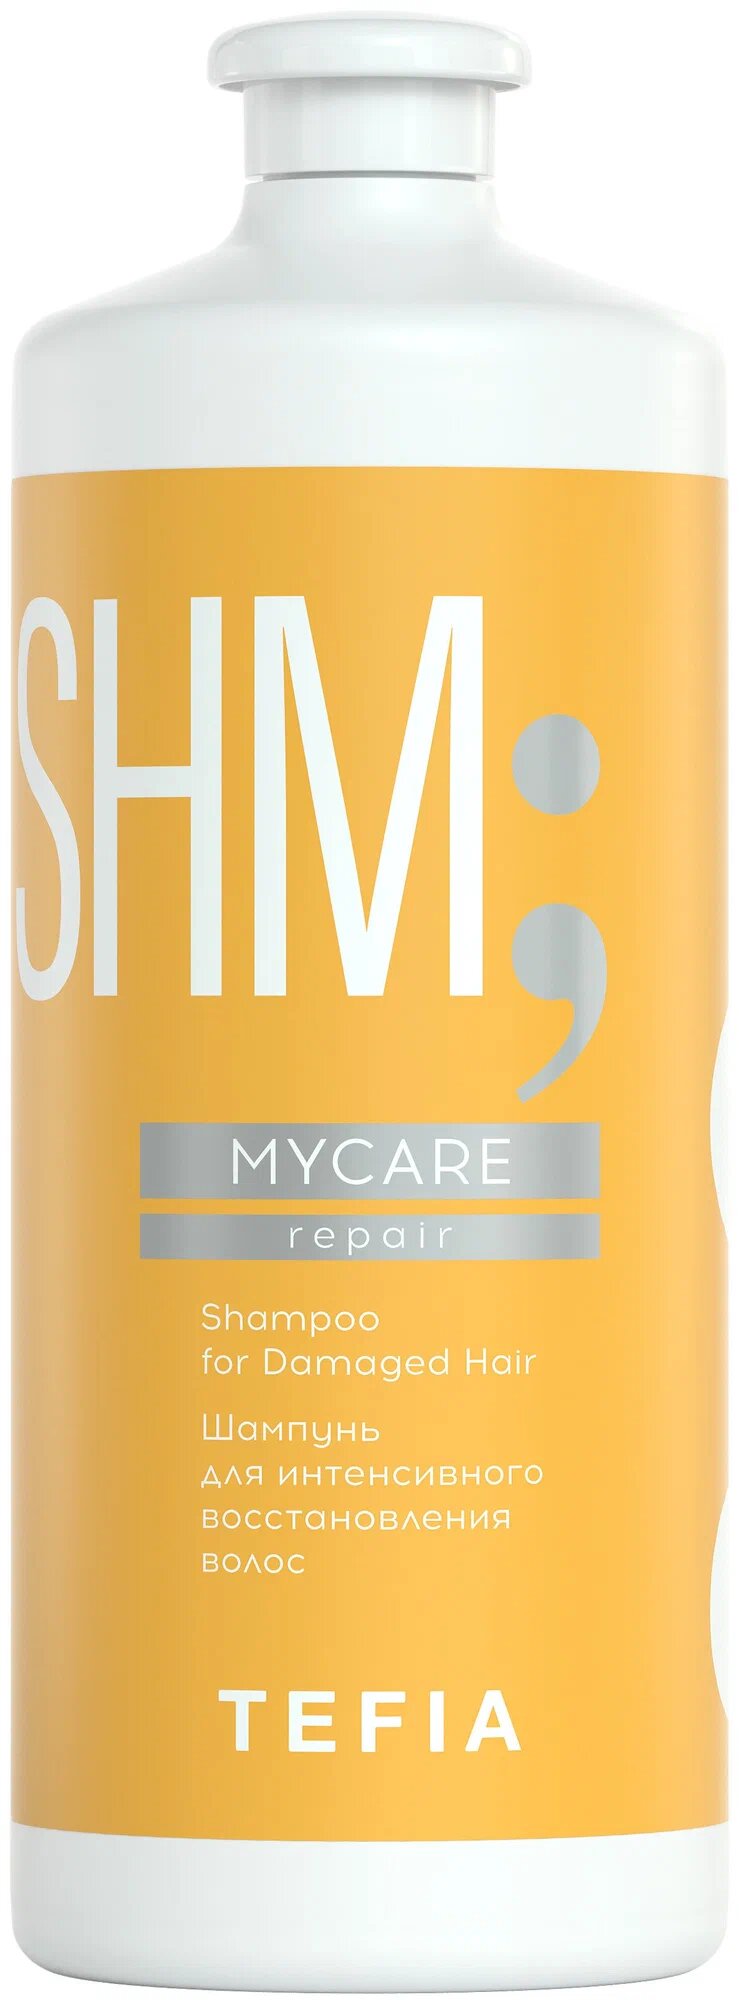 Tefia Шампунь для интенсивного восстановления волос, 1000 мл SHM MyCare Repair for Damaged Hair